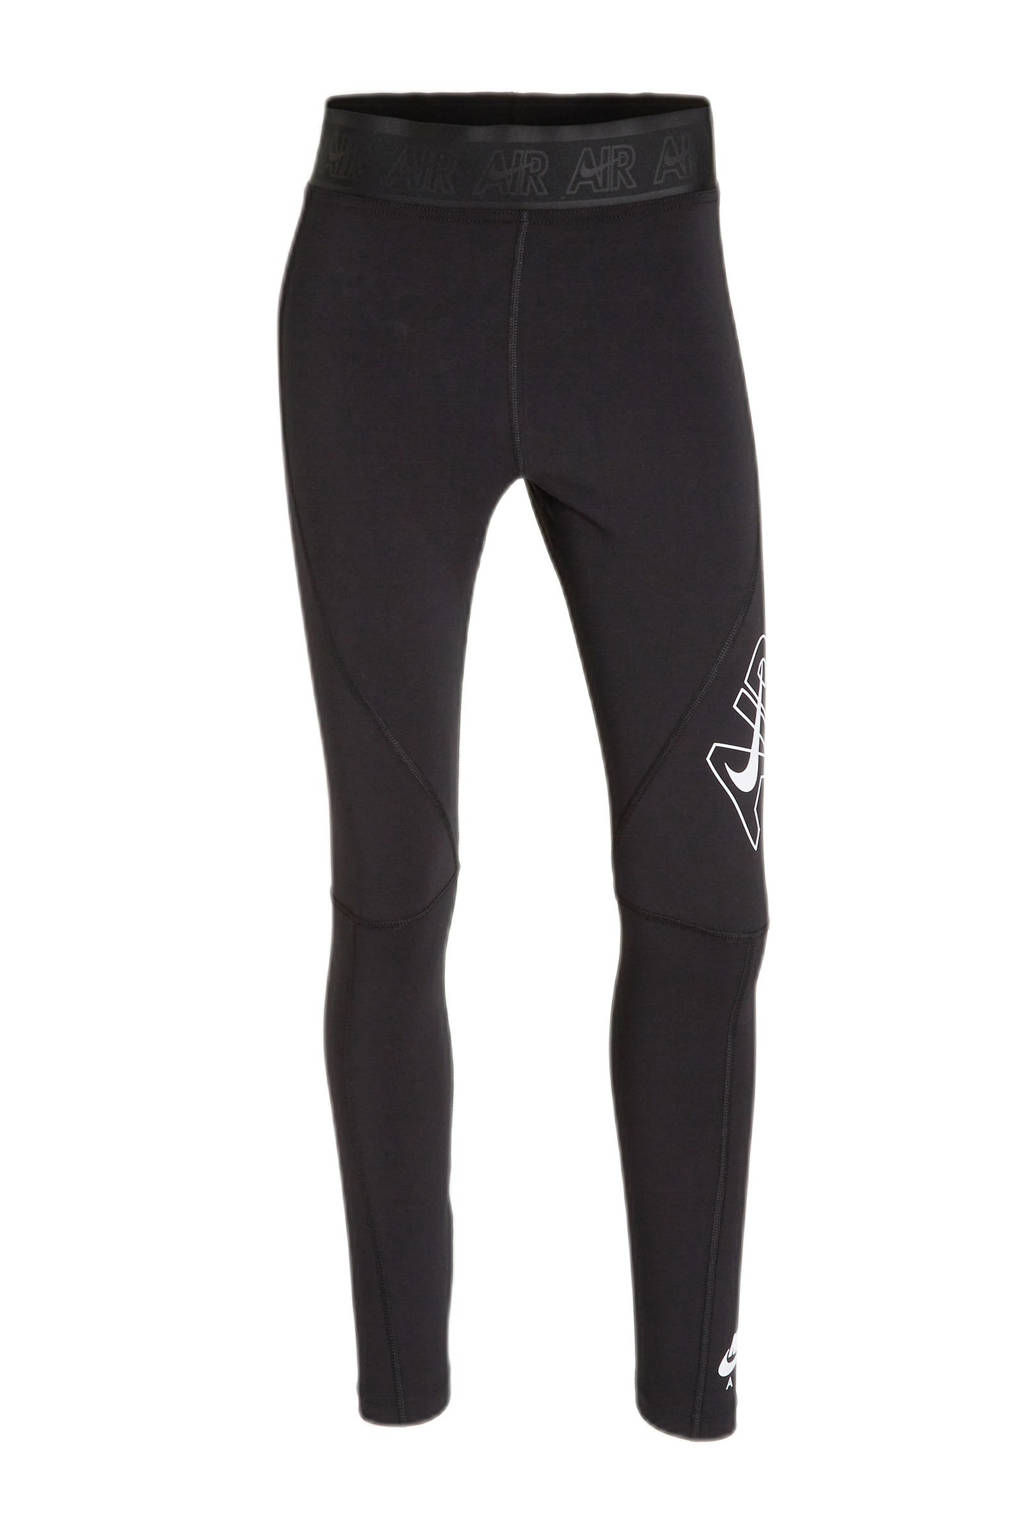 Zwarte dames Nike high waist slim fit legging van katoen met elastische tailleband en logo dessin